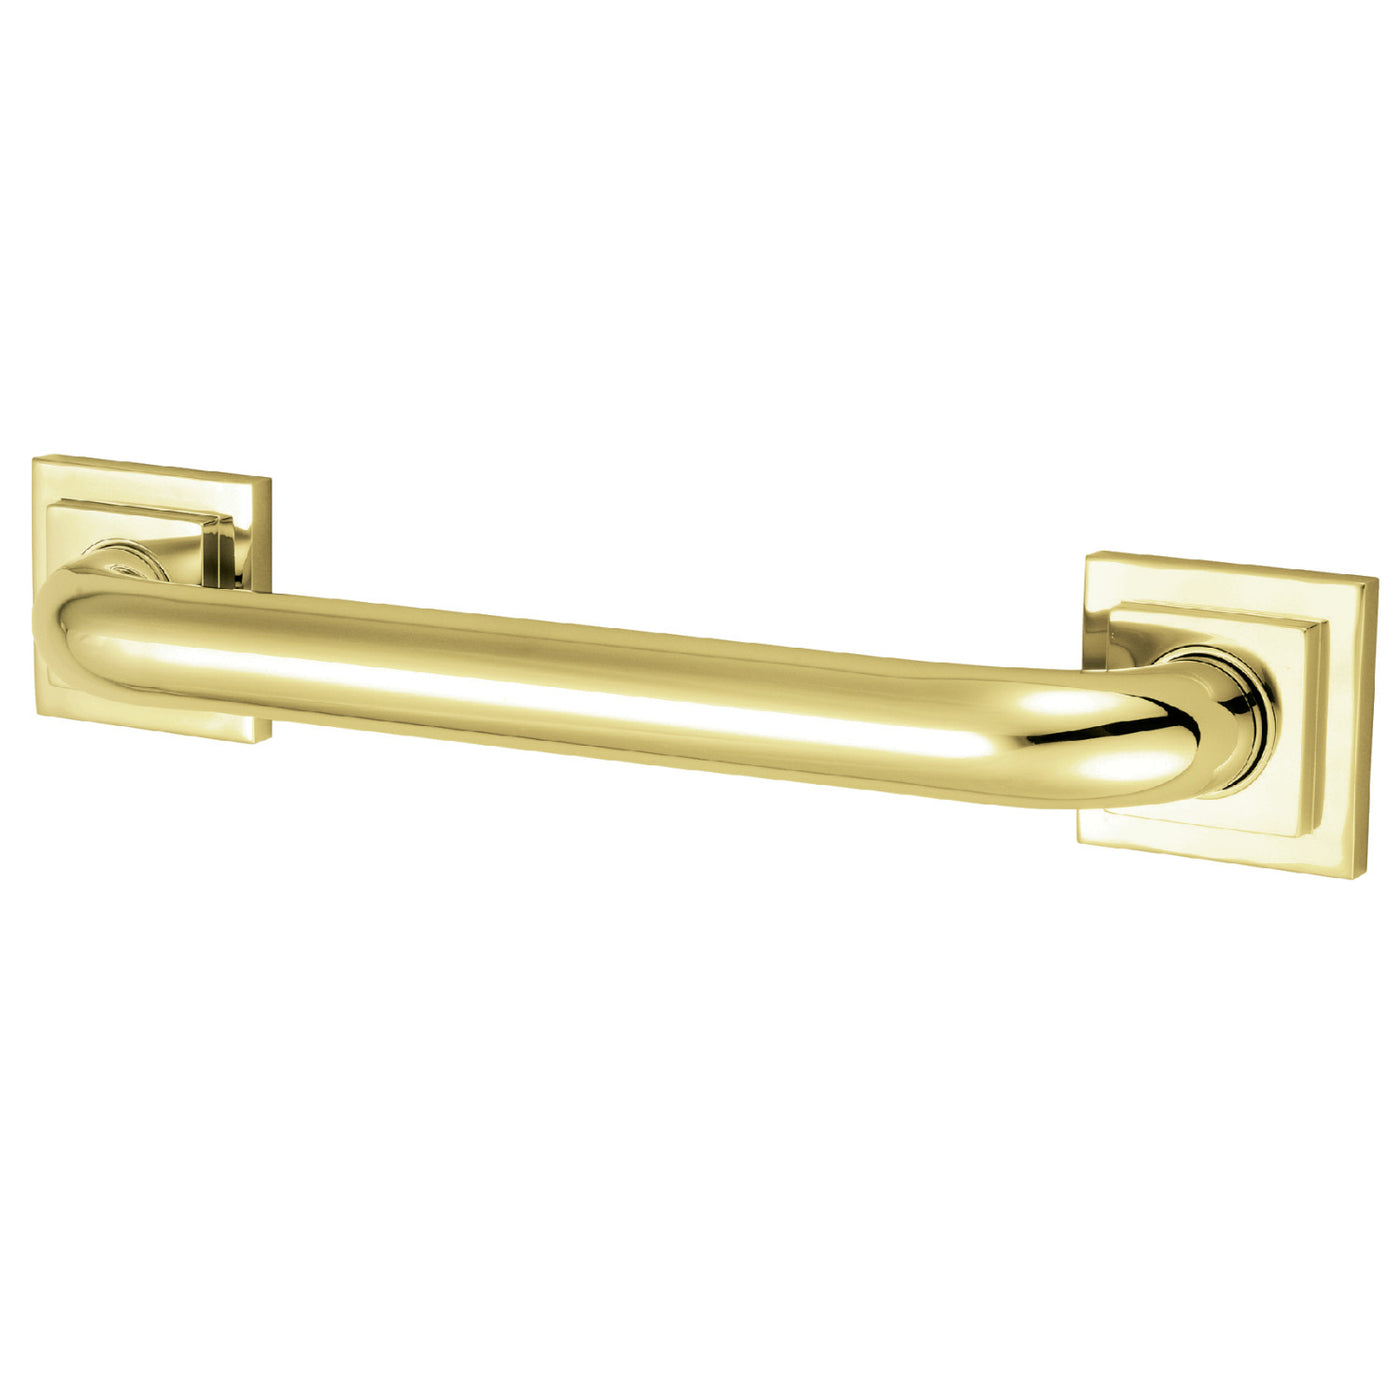 Elements of Design EDR614242 24-Inch x 1-1/4-Inch O.D Grab Bar, Polished Brass